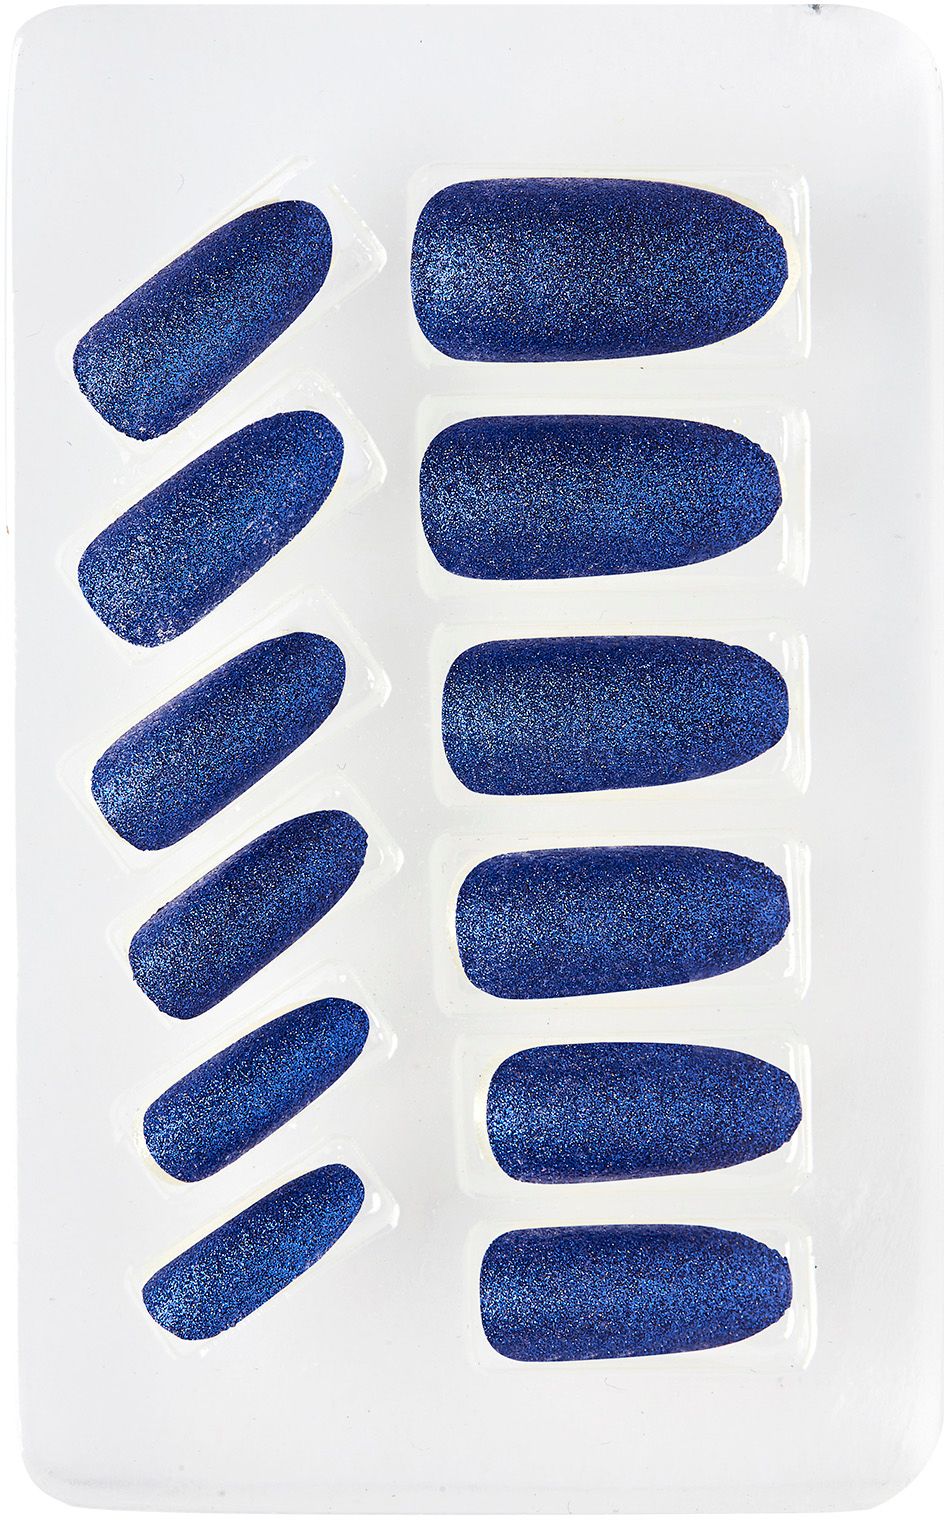 Blauwe glitter nagels